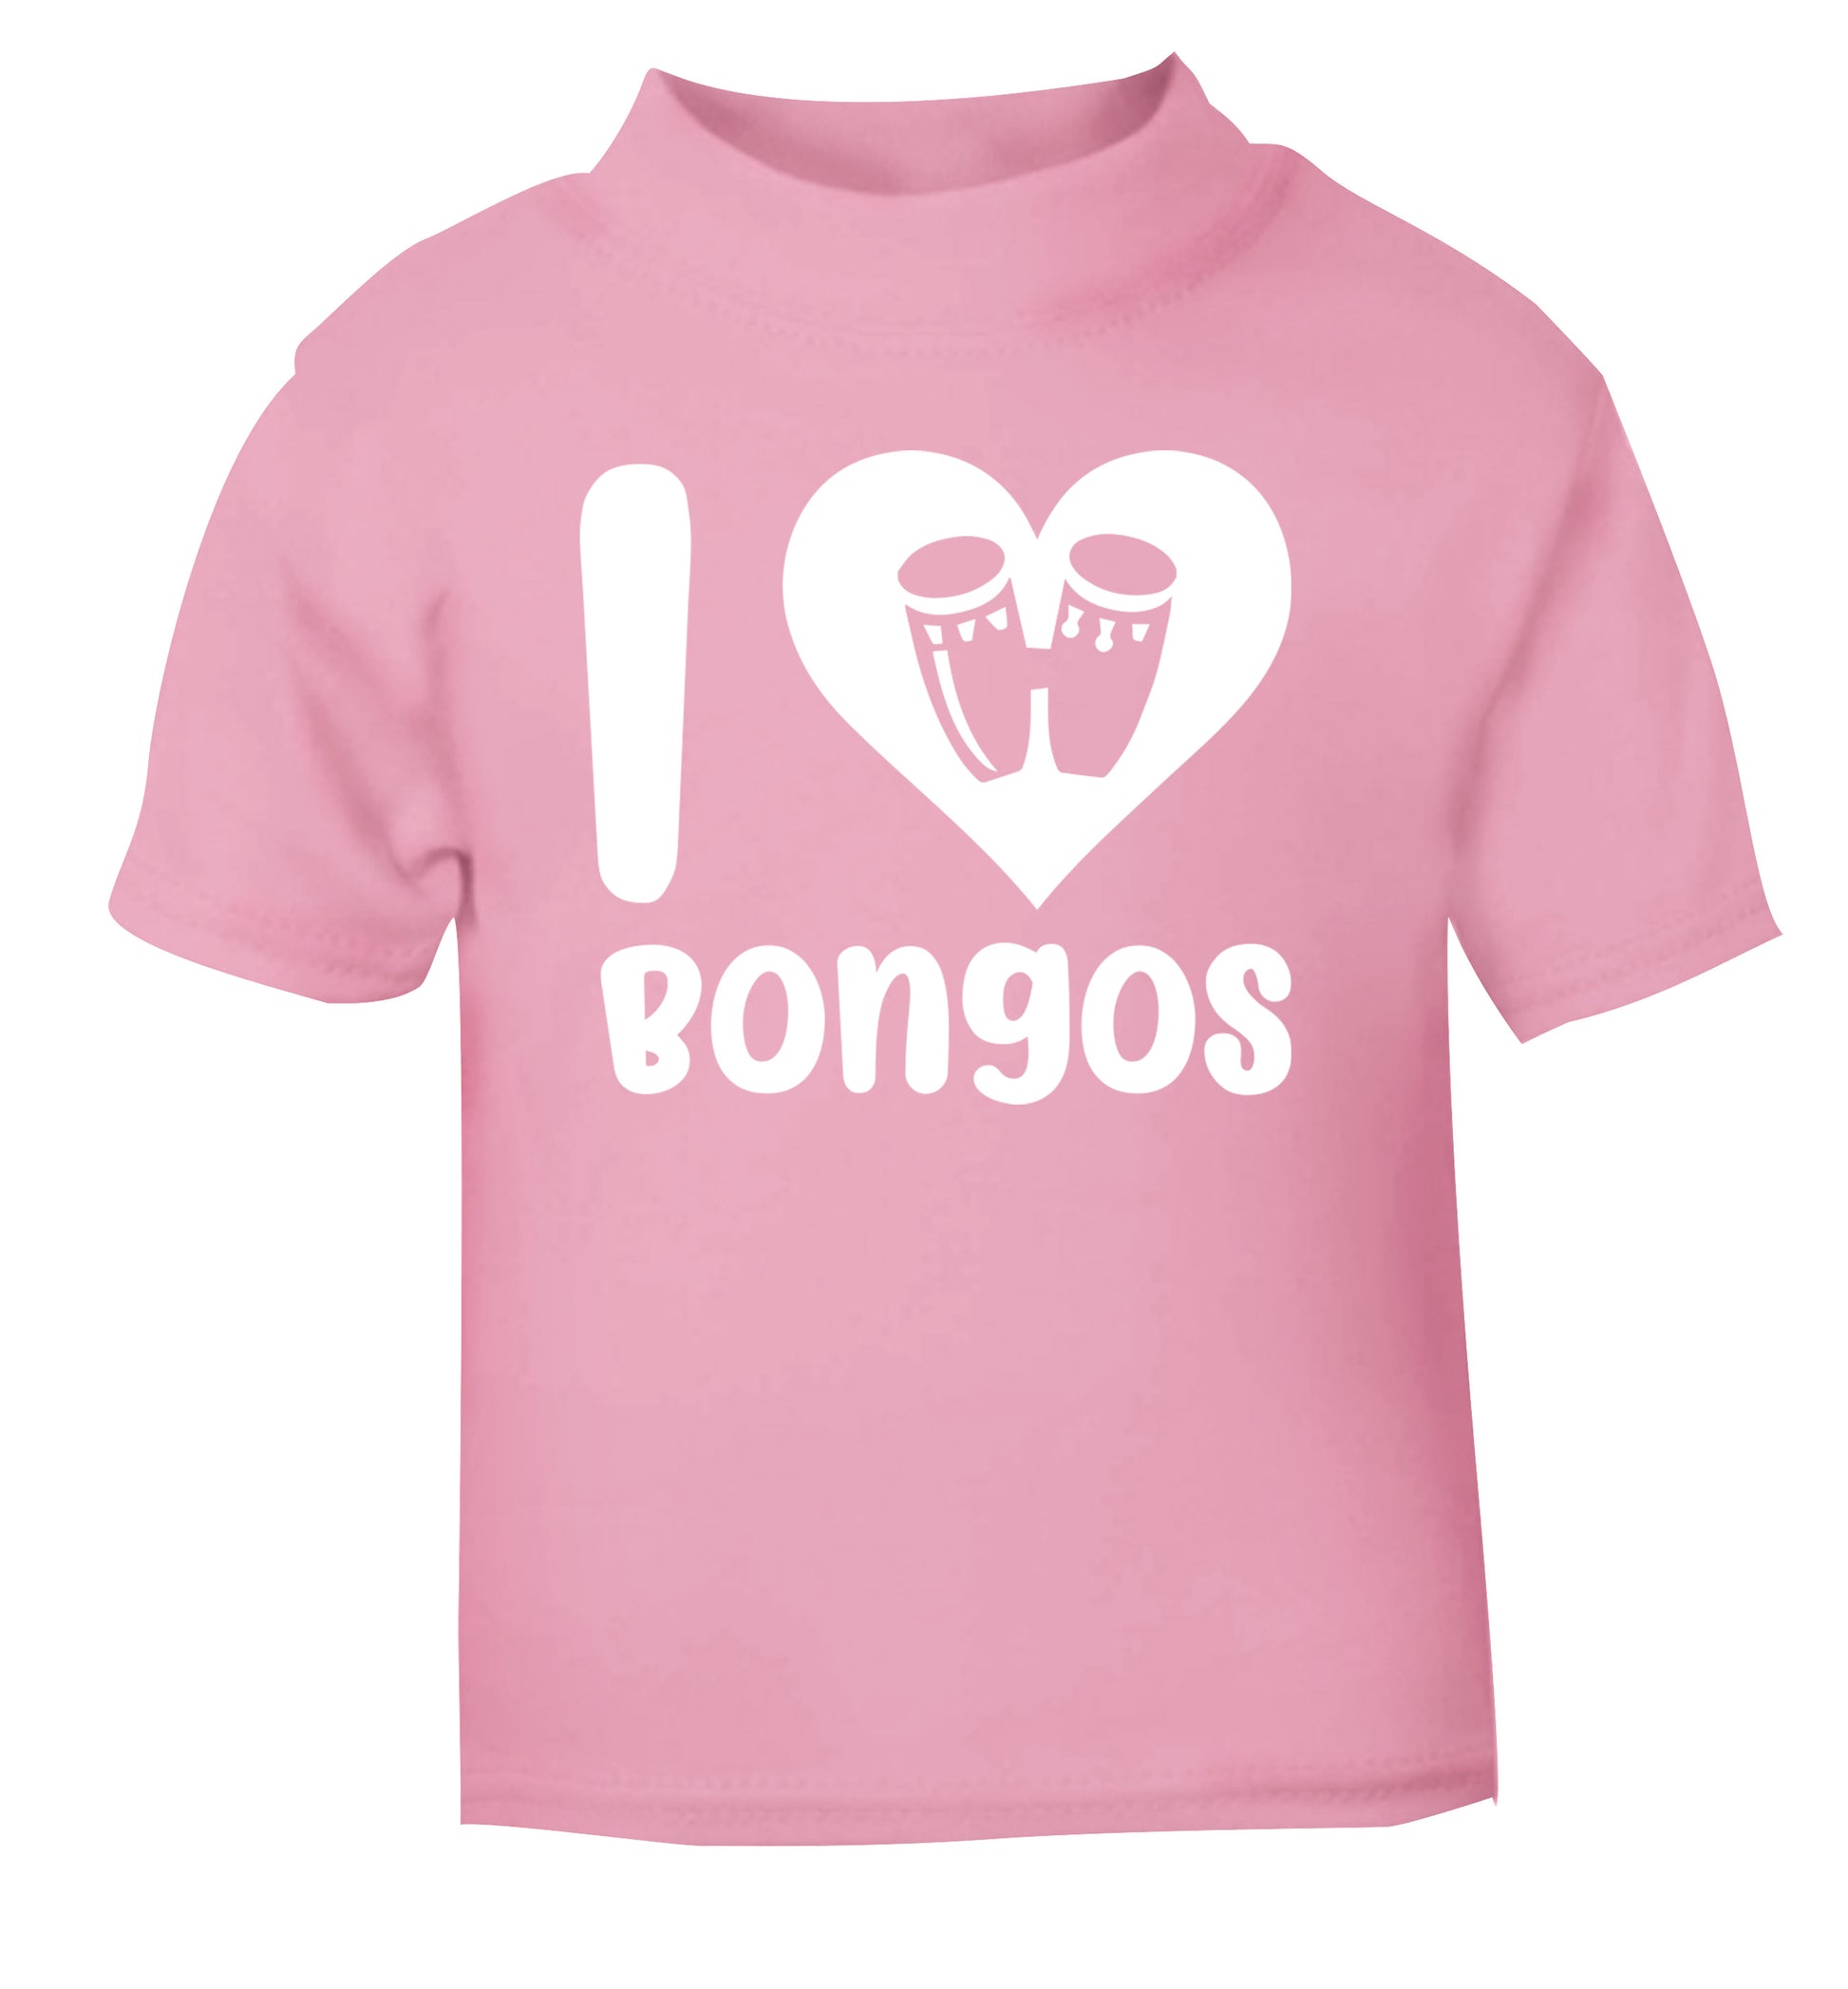 I love bongos light pink Baby Toddler Tshirt 2 Years